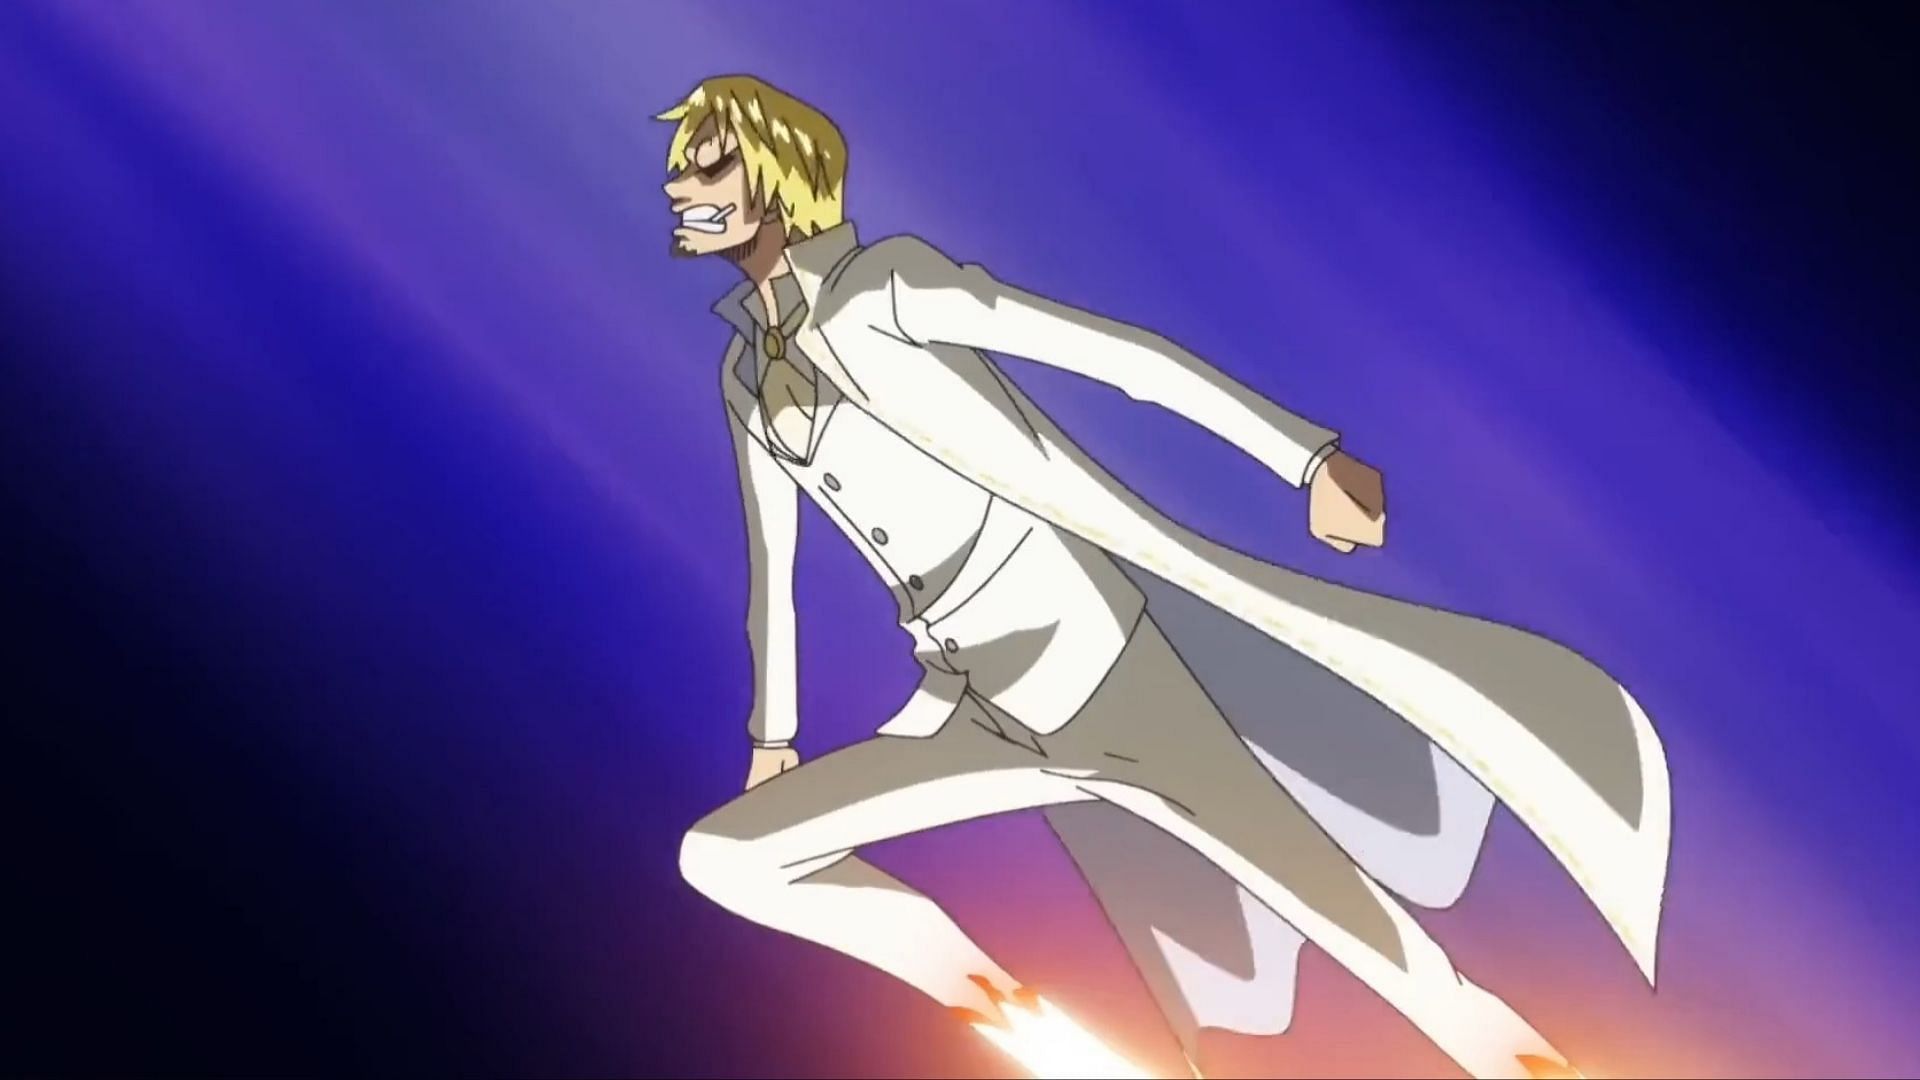 Sanji as seen in the One Piece anime (Image via Toei)